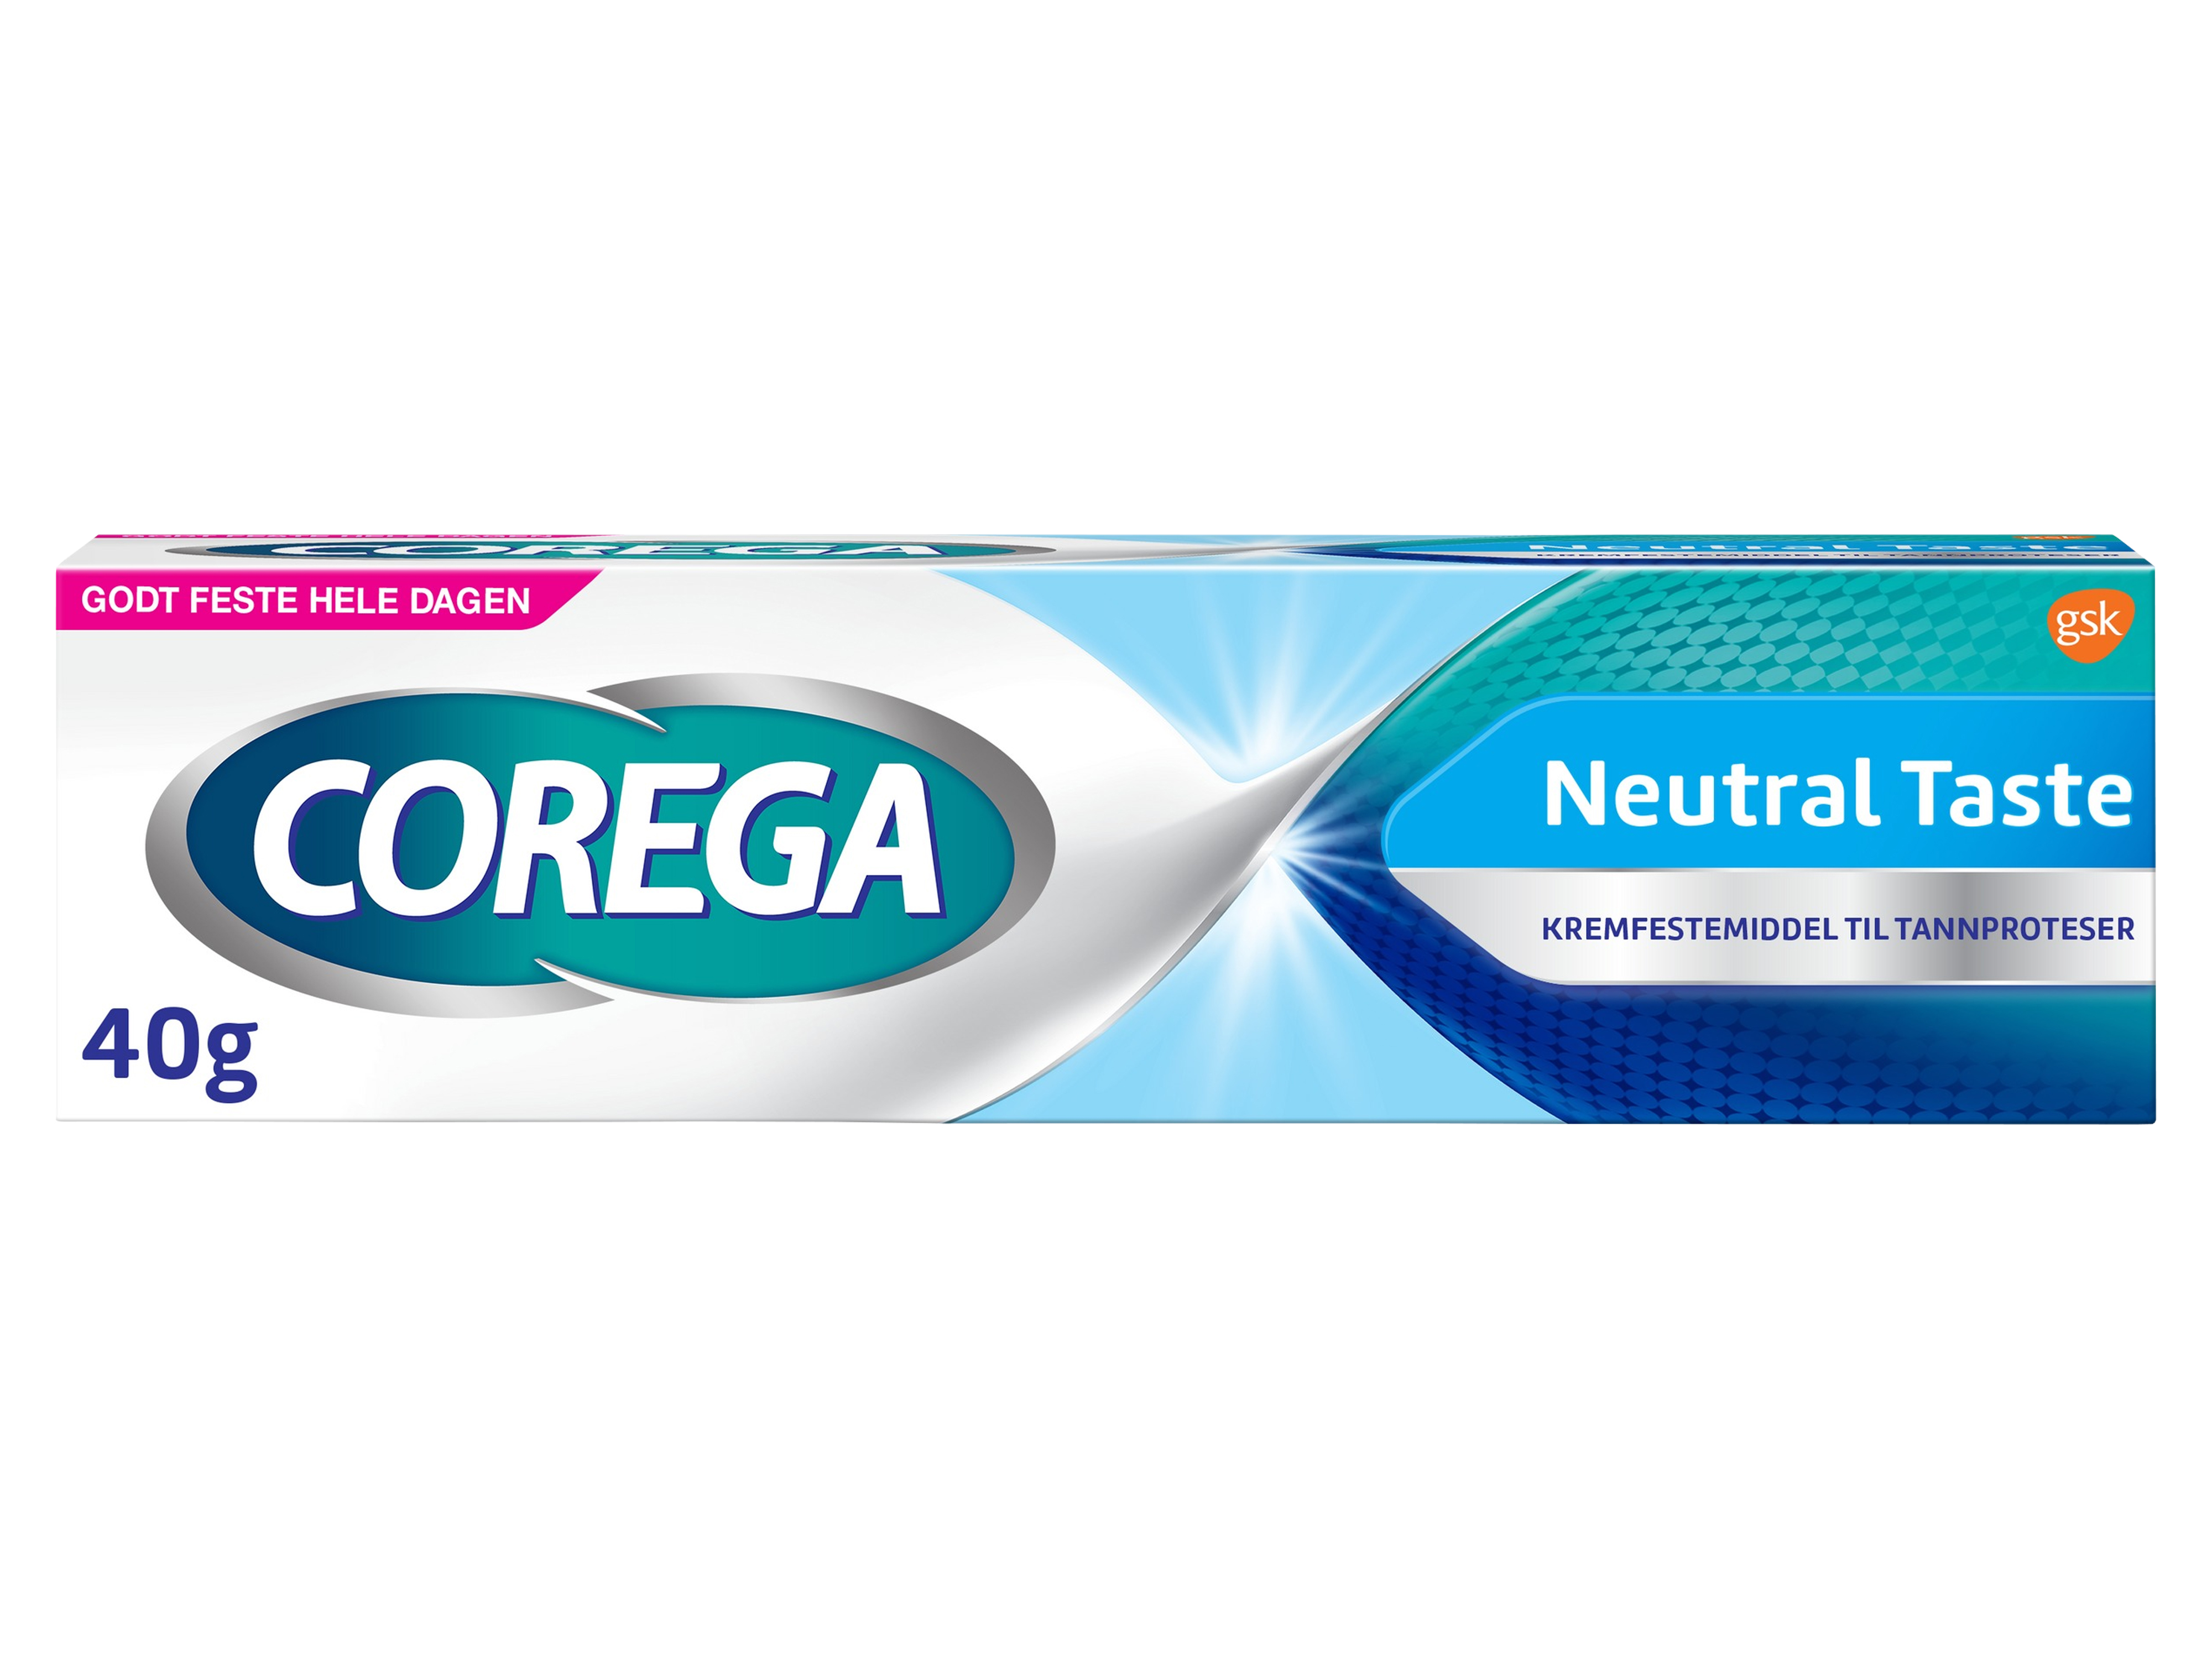 Corega Neutral Taste Kremfestemiddel, 40 g